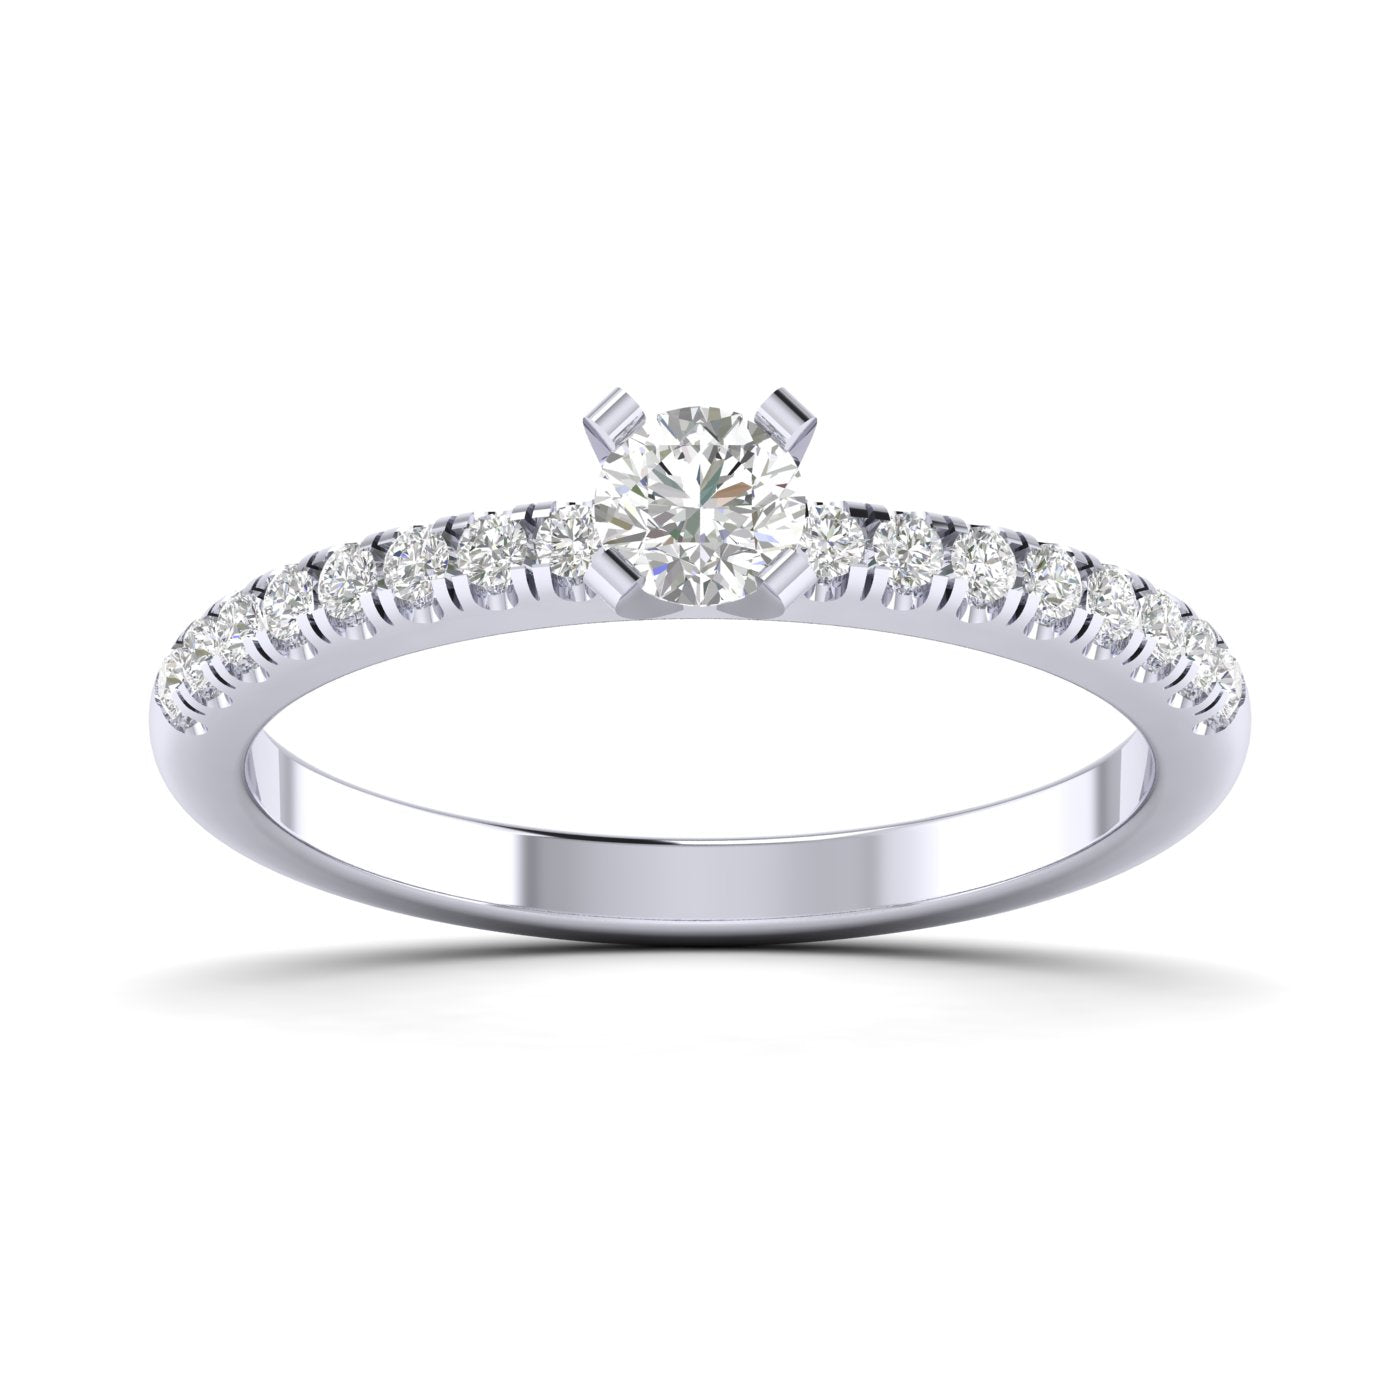 White Solitaire Diamond Ring